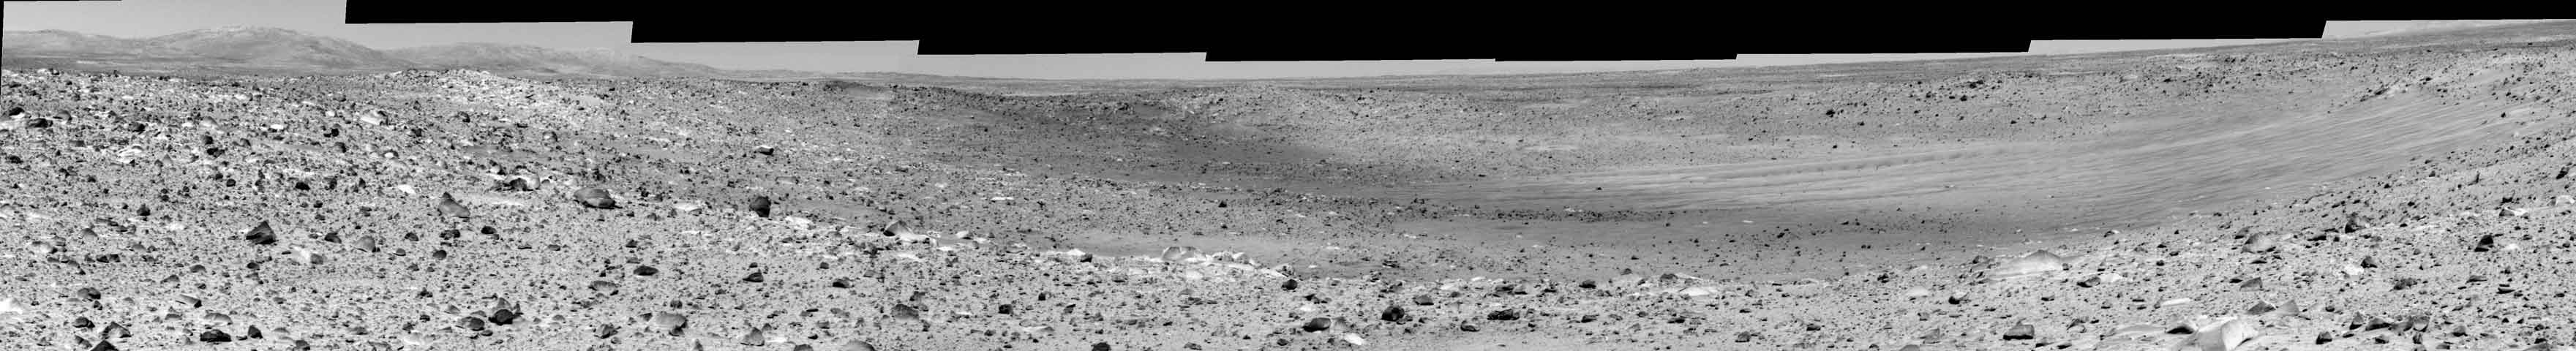 Missoula Cratera em Marte